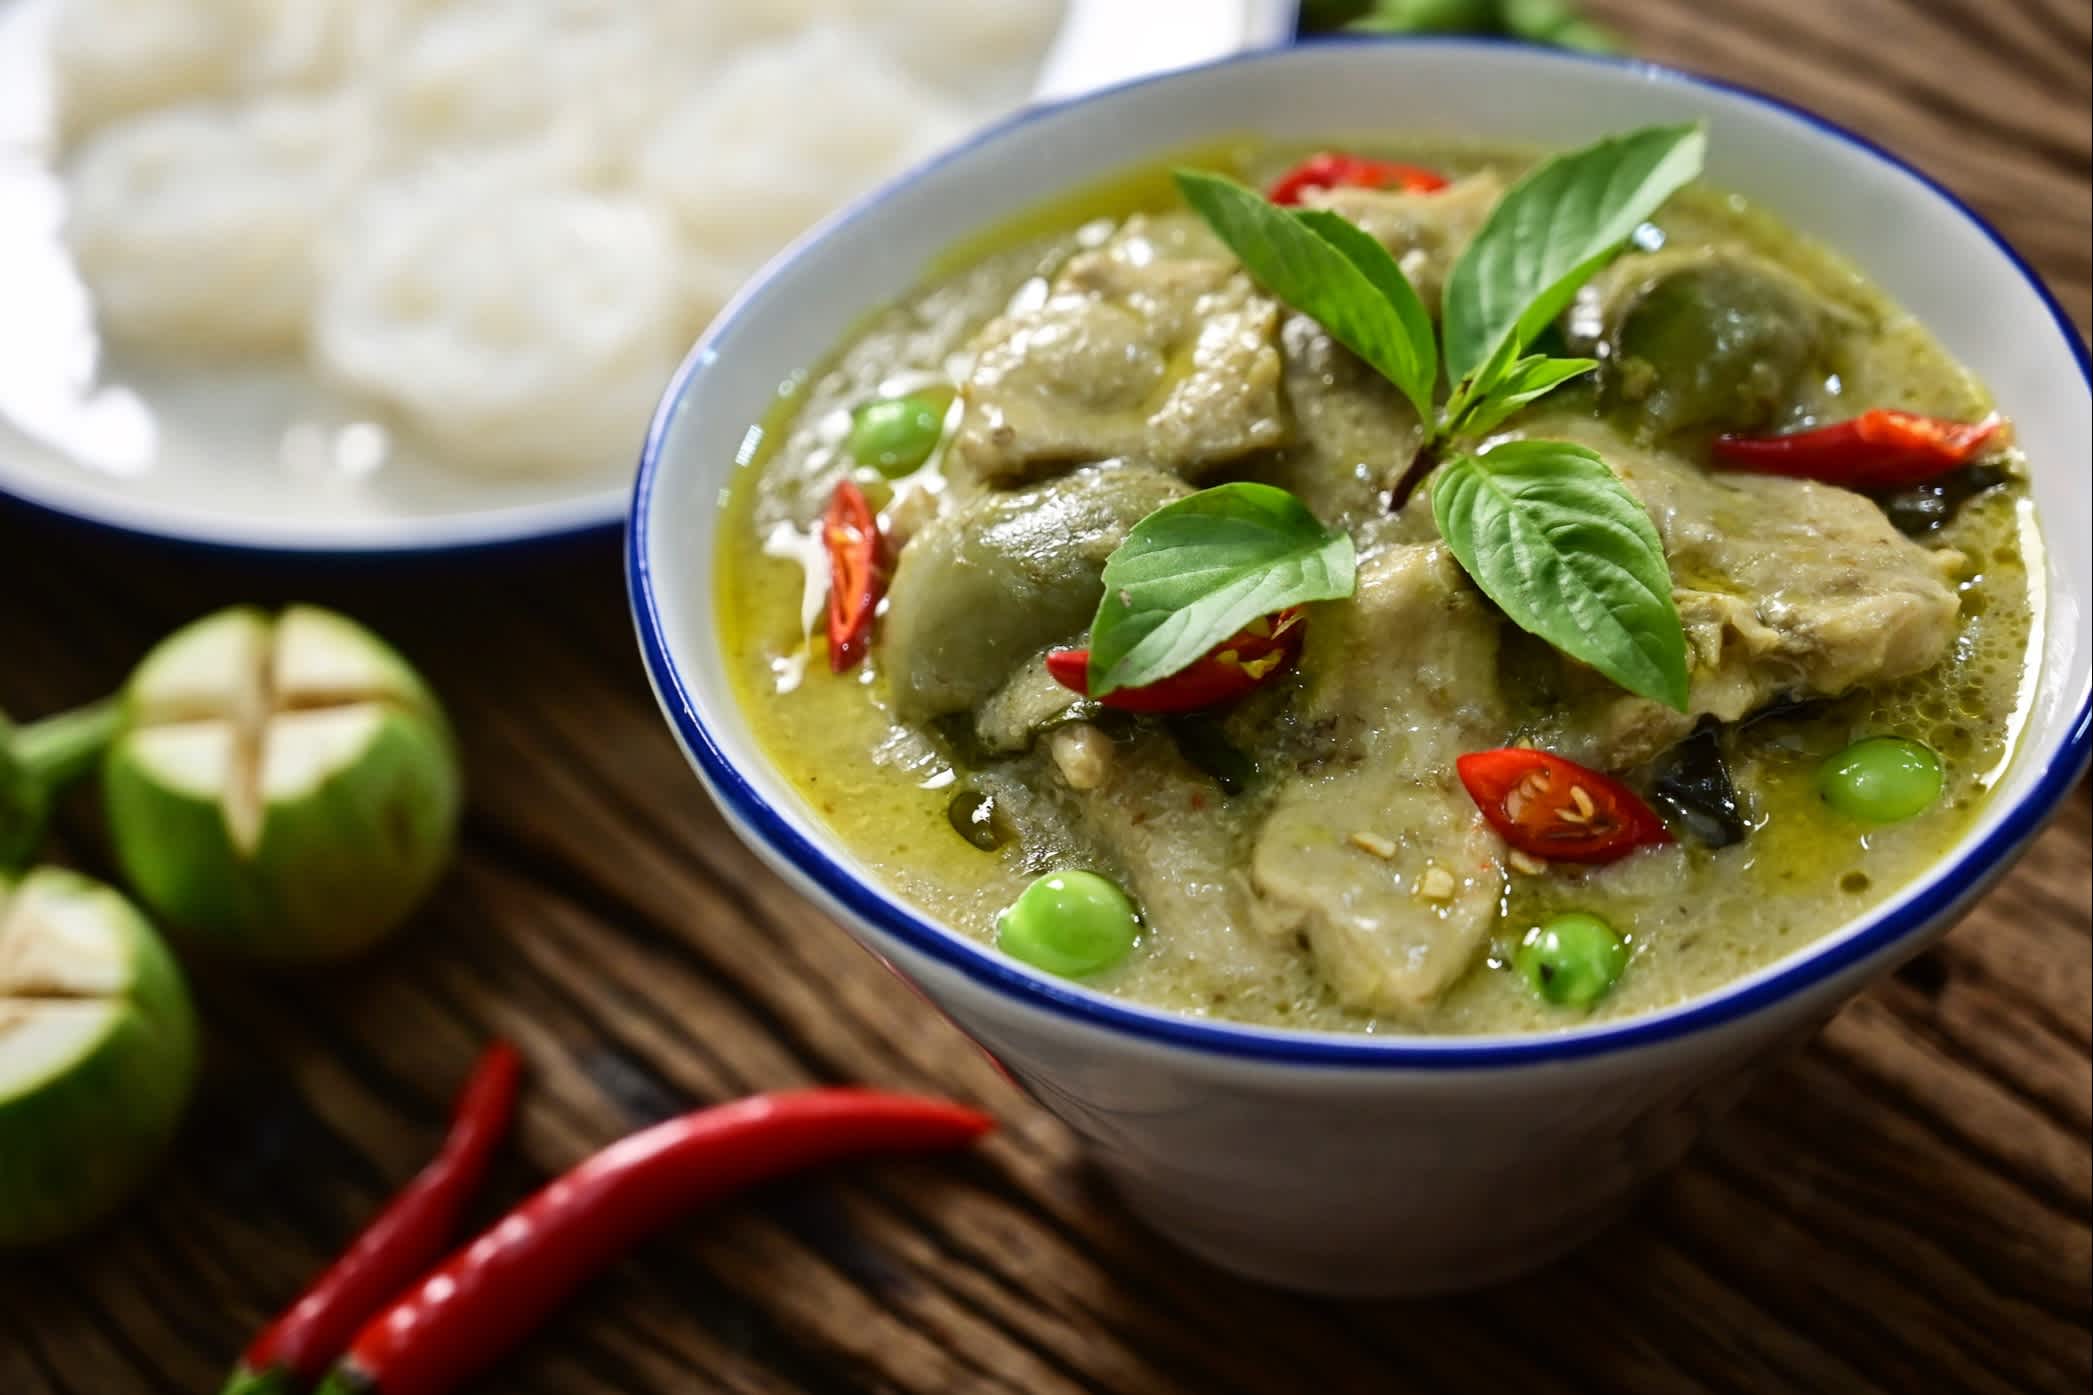 Curry vert thaï, cuisine thaïlandaise locale